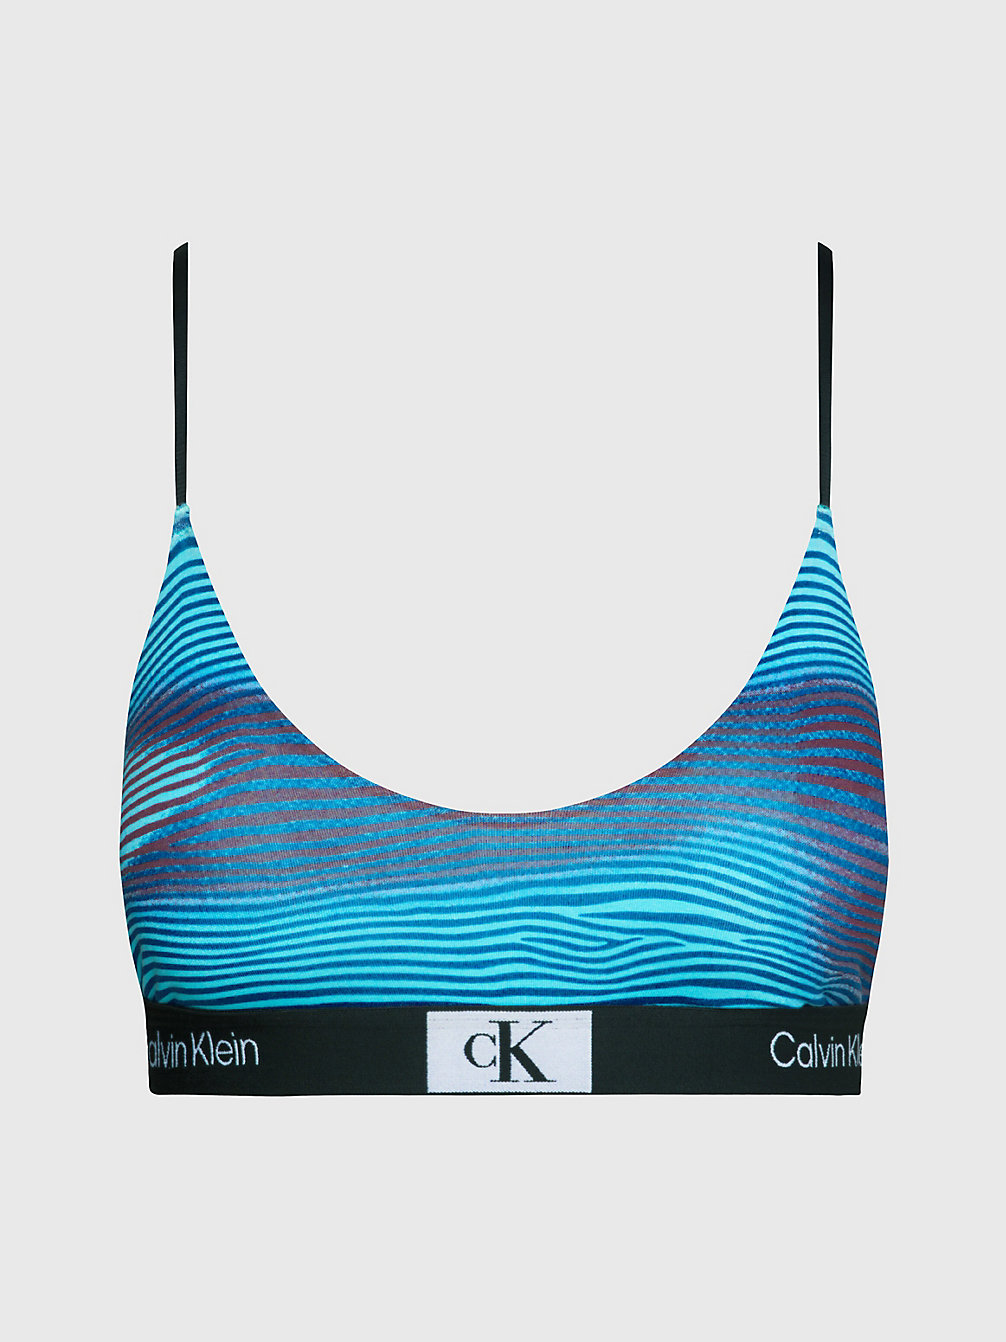 INFARED LINES - EGGSHELL BLUE String-Bralette - Ck96 undefined Damen Calvin Klein